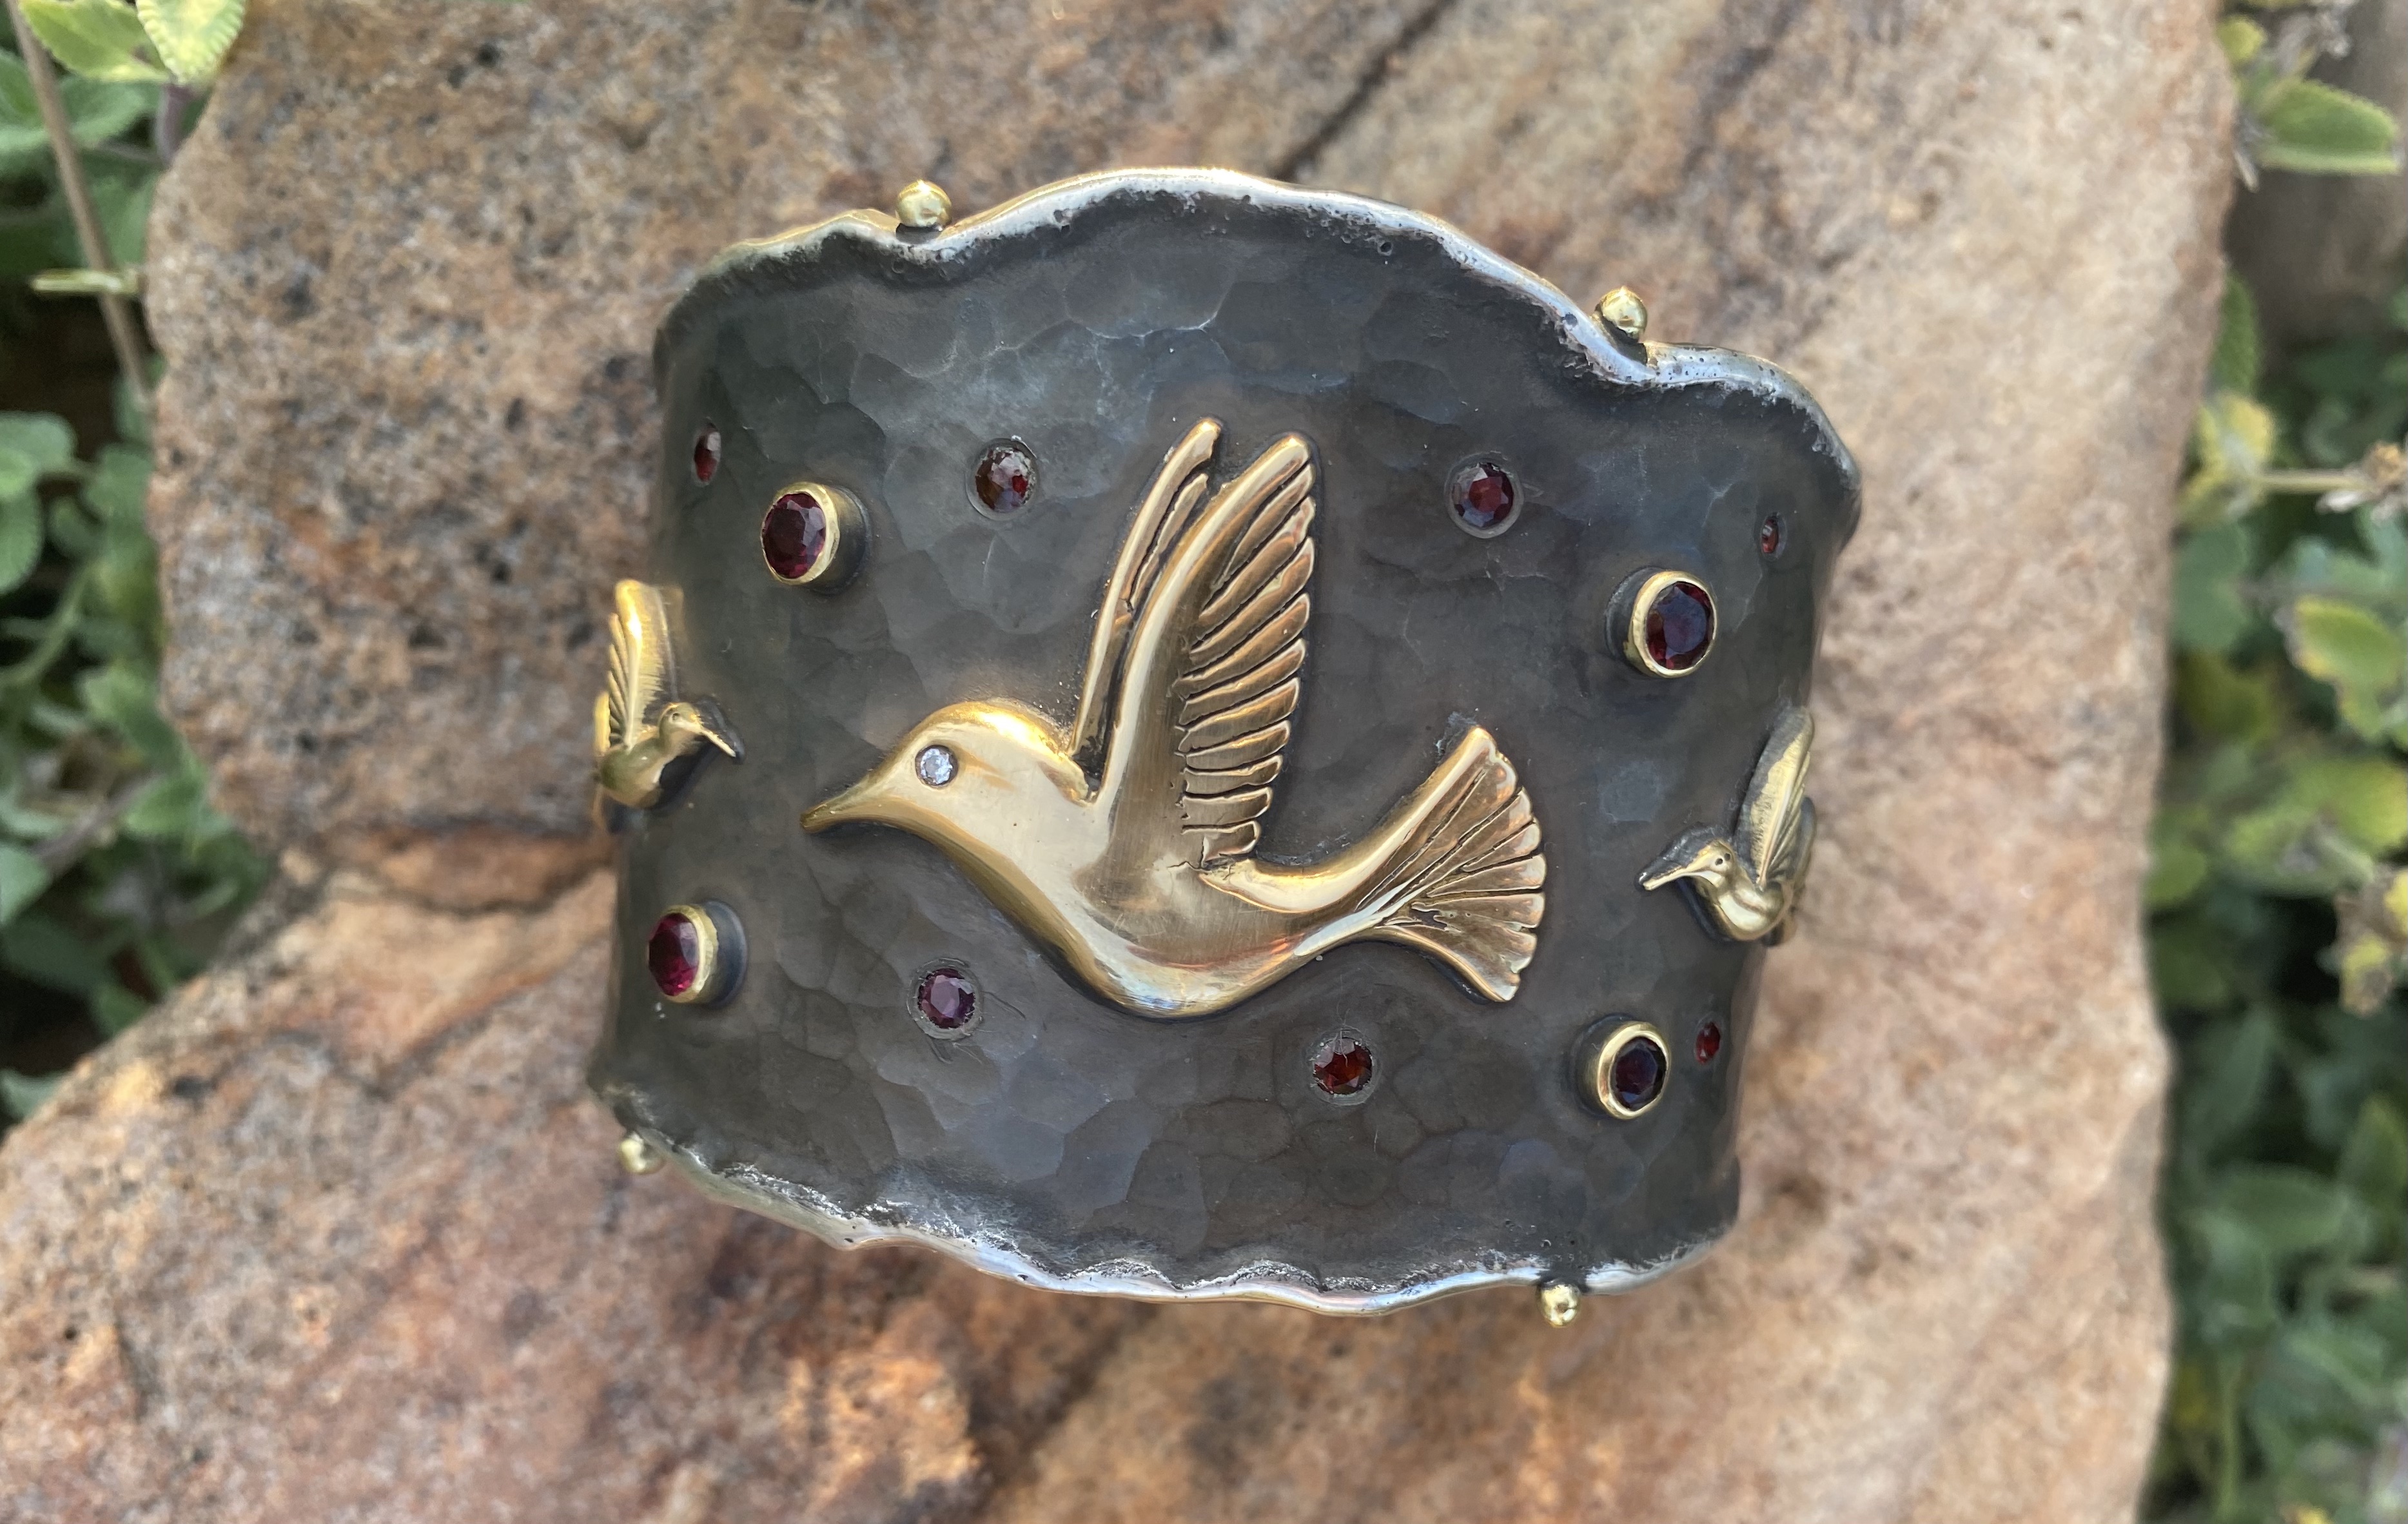 Hummingbird Bracelet